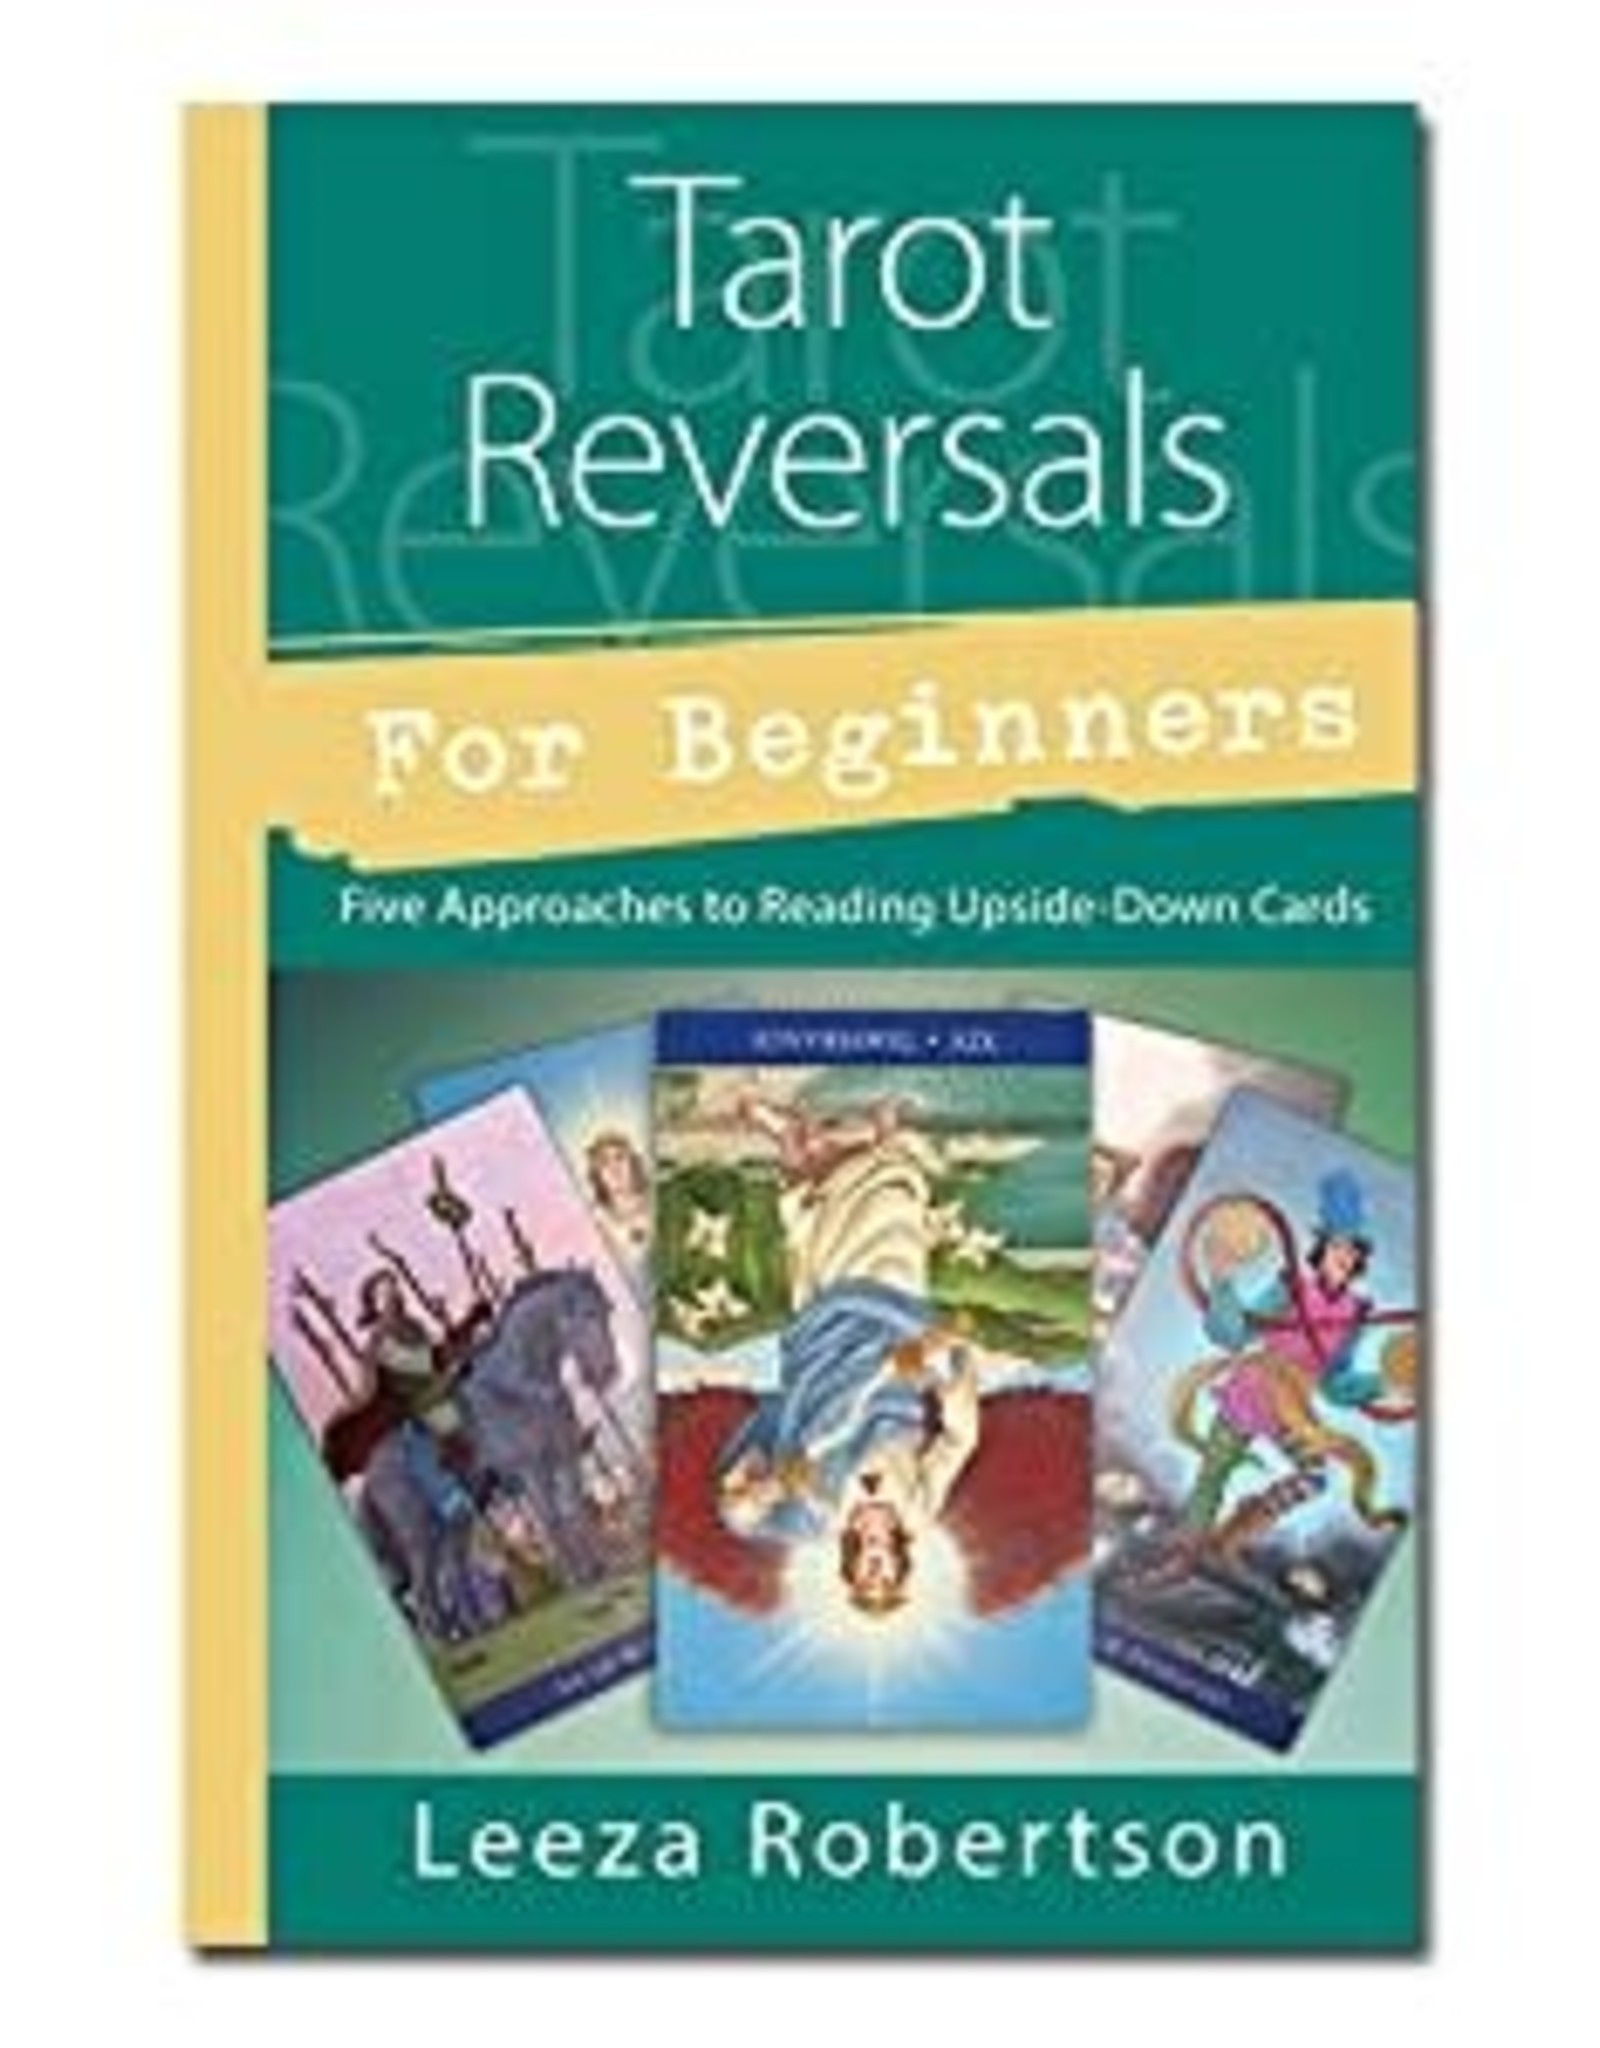 Leeza Robertson Tarot Reversals for Beginners by Leeza Robertson